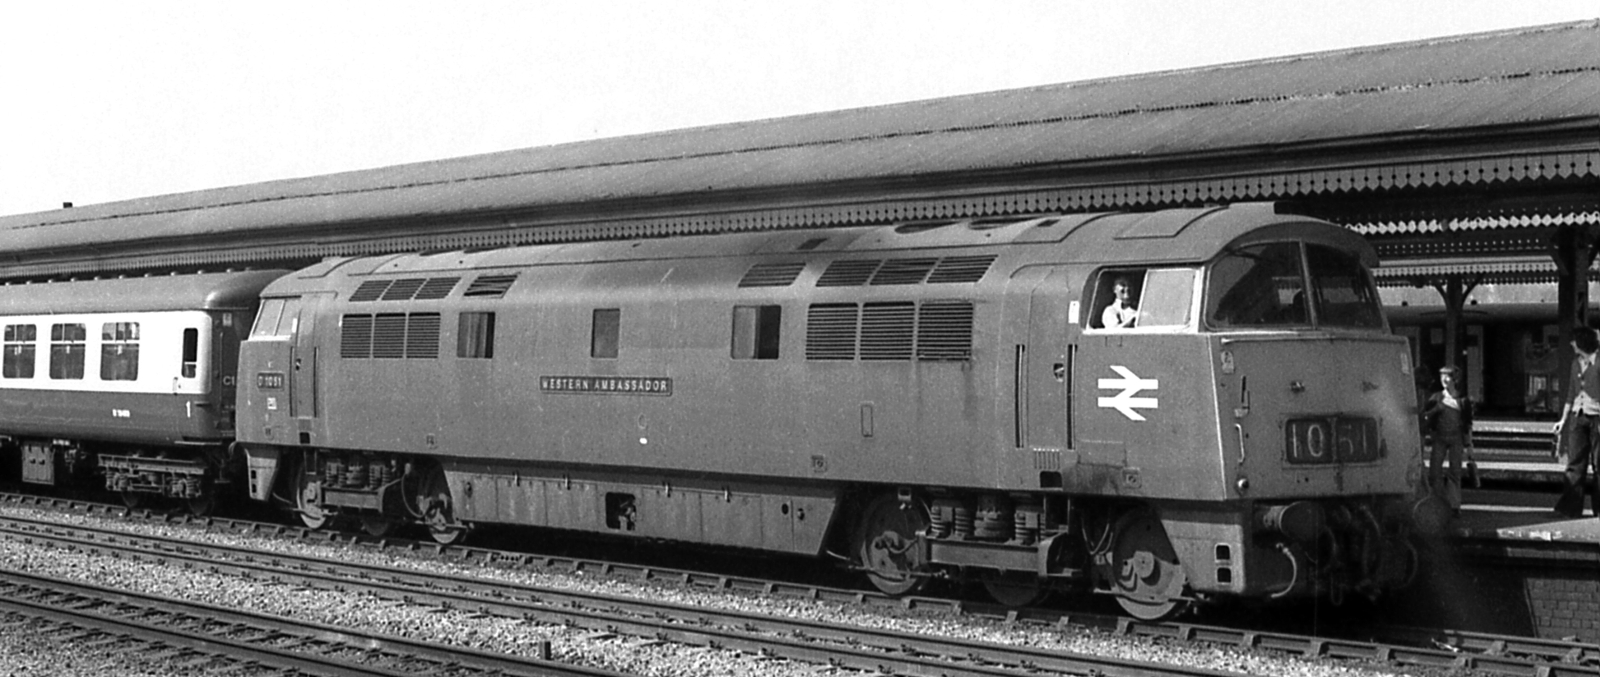 D1051 “Western Ambassador” in April 1976 at Reading